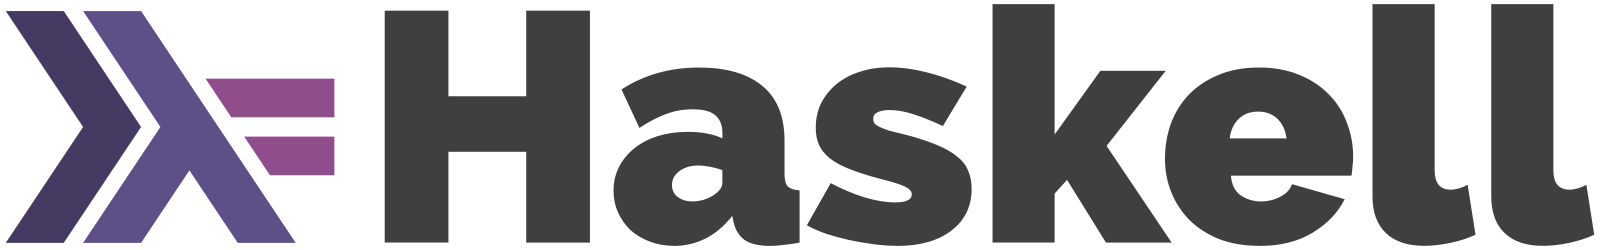 le
 
logo
 
de
 
Haskell
